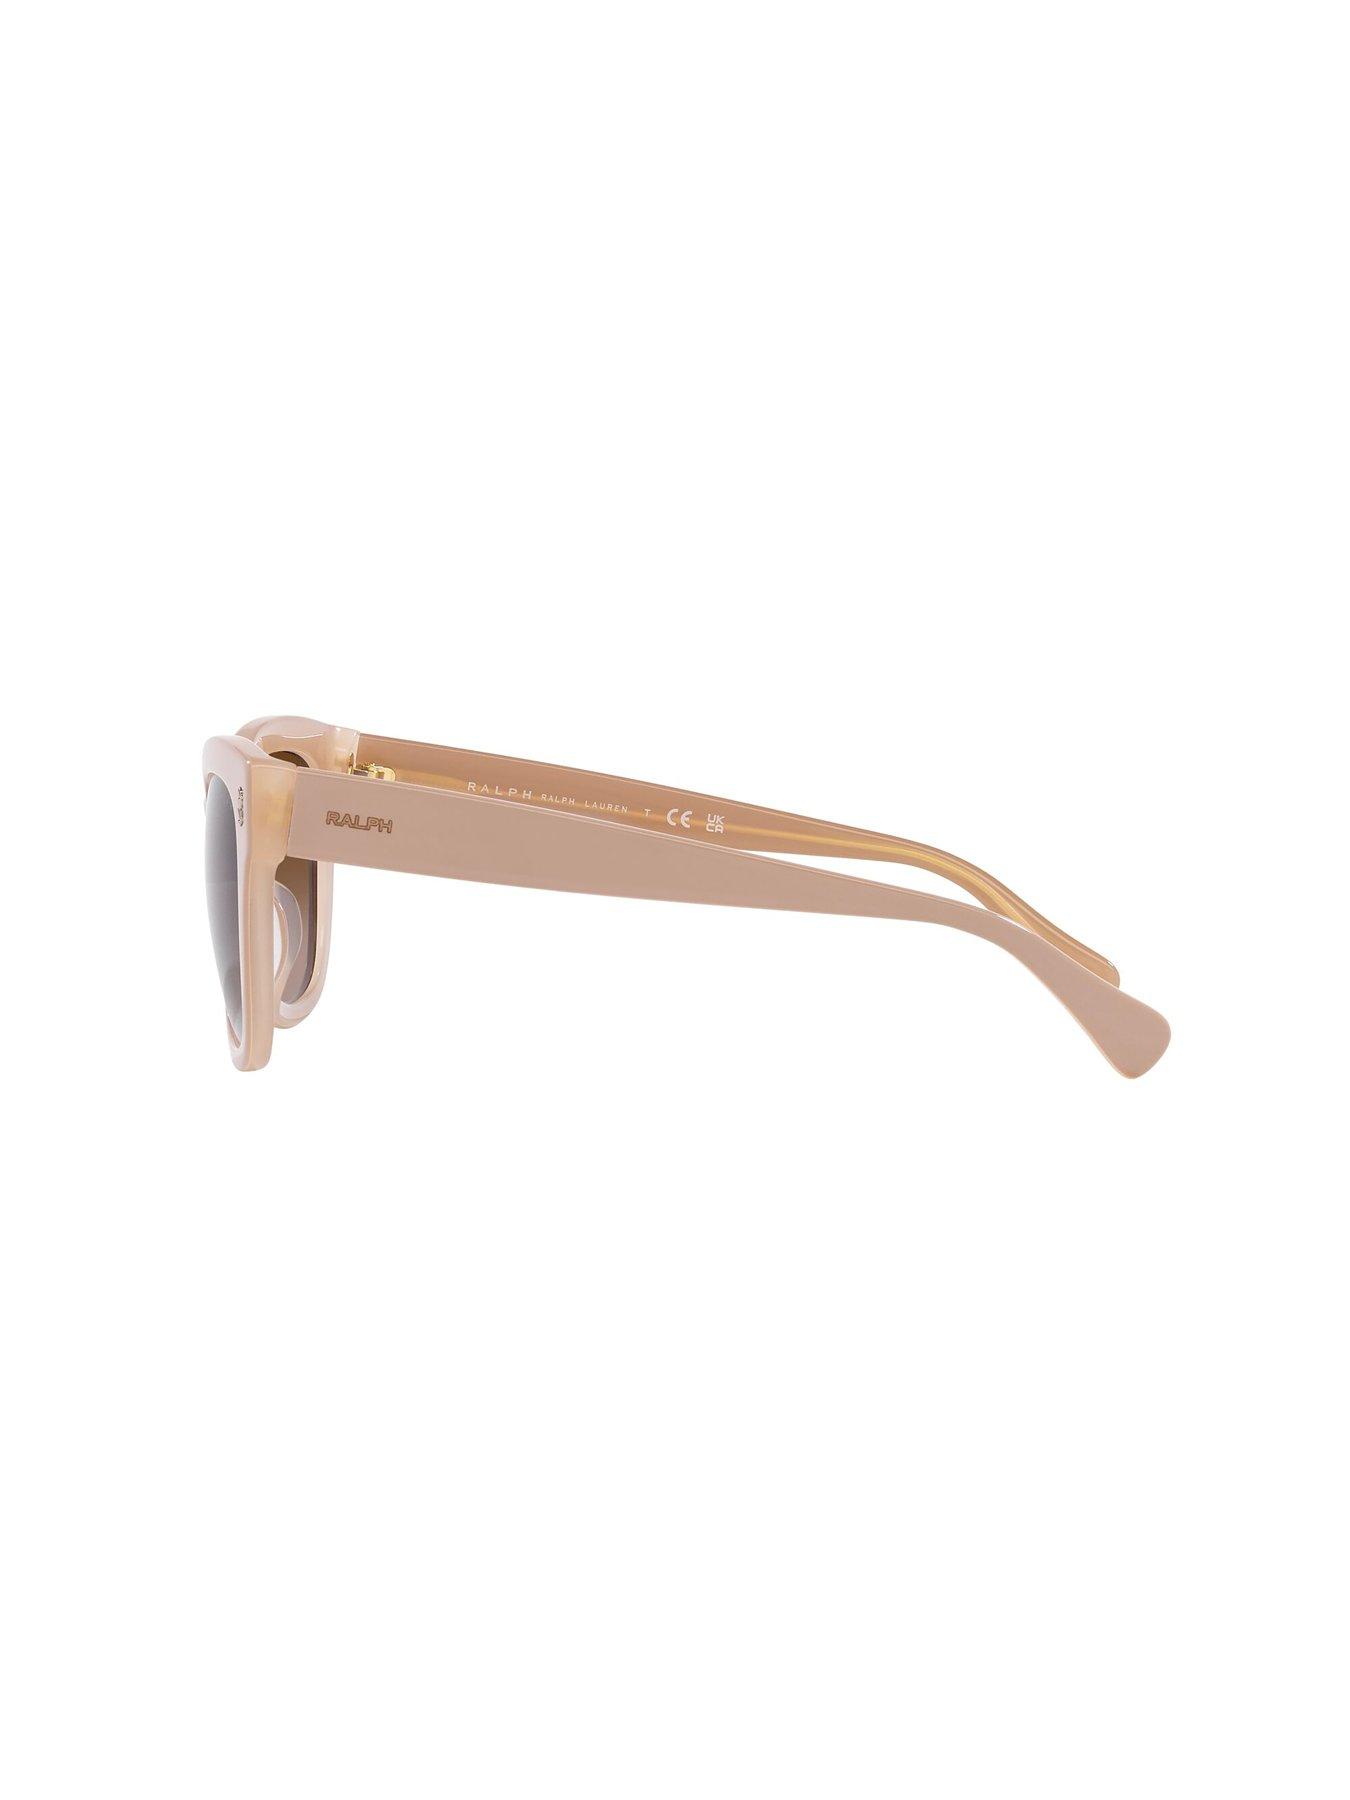 Ralph Oval Acetate Sunglasses - Beige | Very.co.uk